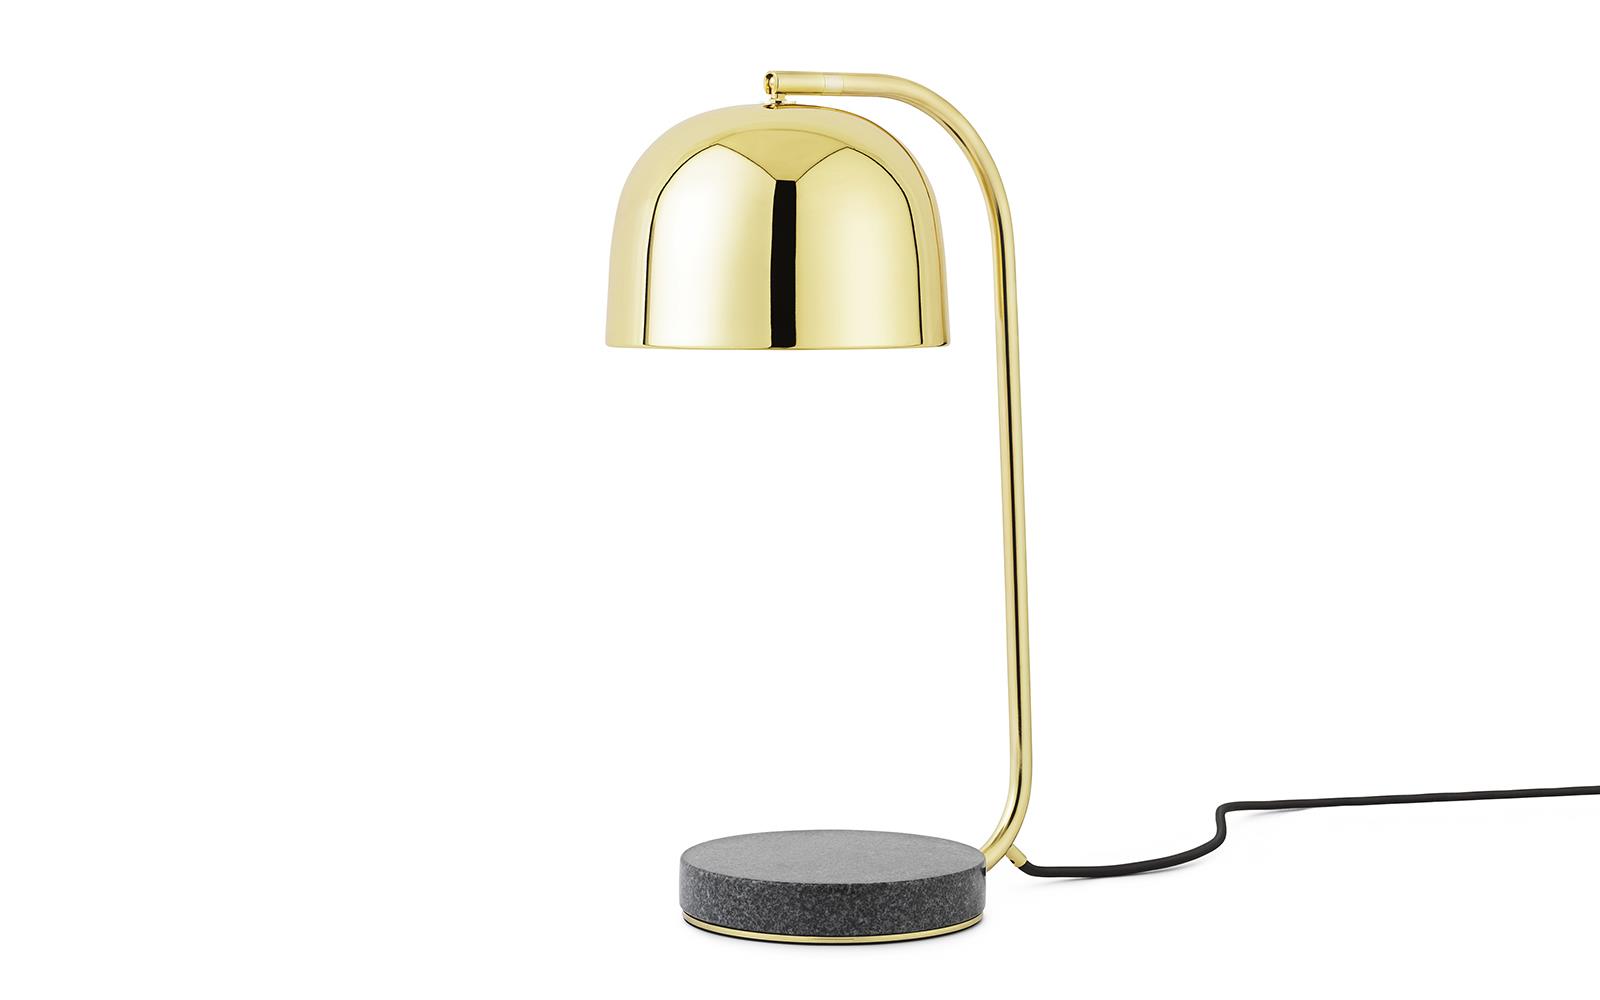 Normann Copenhagen - Grant Desk Lamp - Metallic (502016)